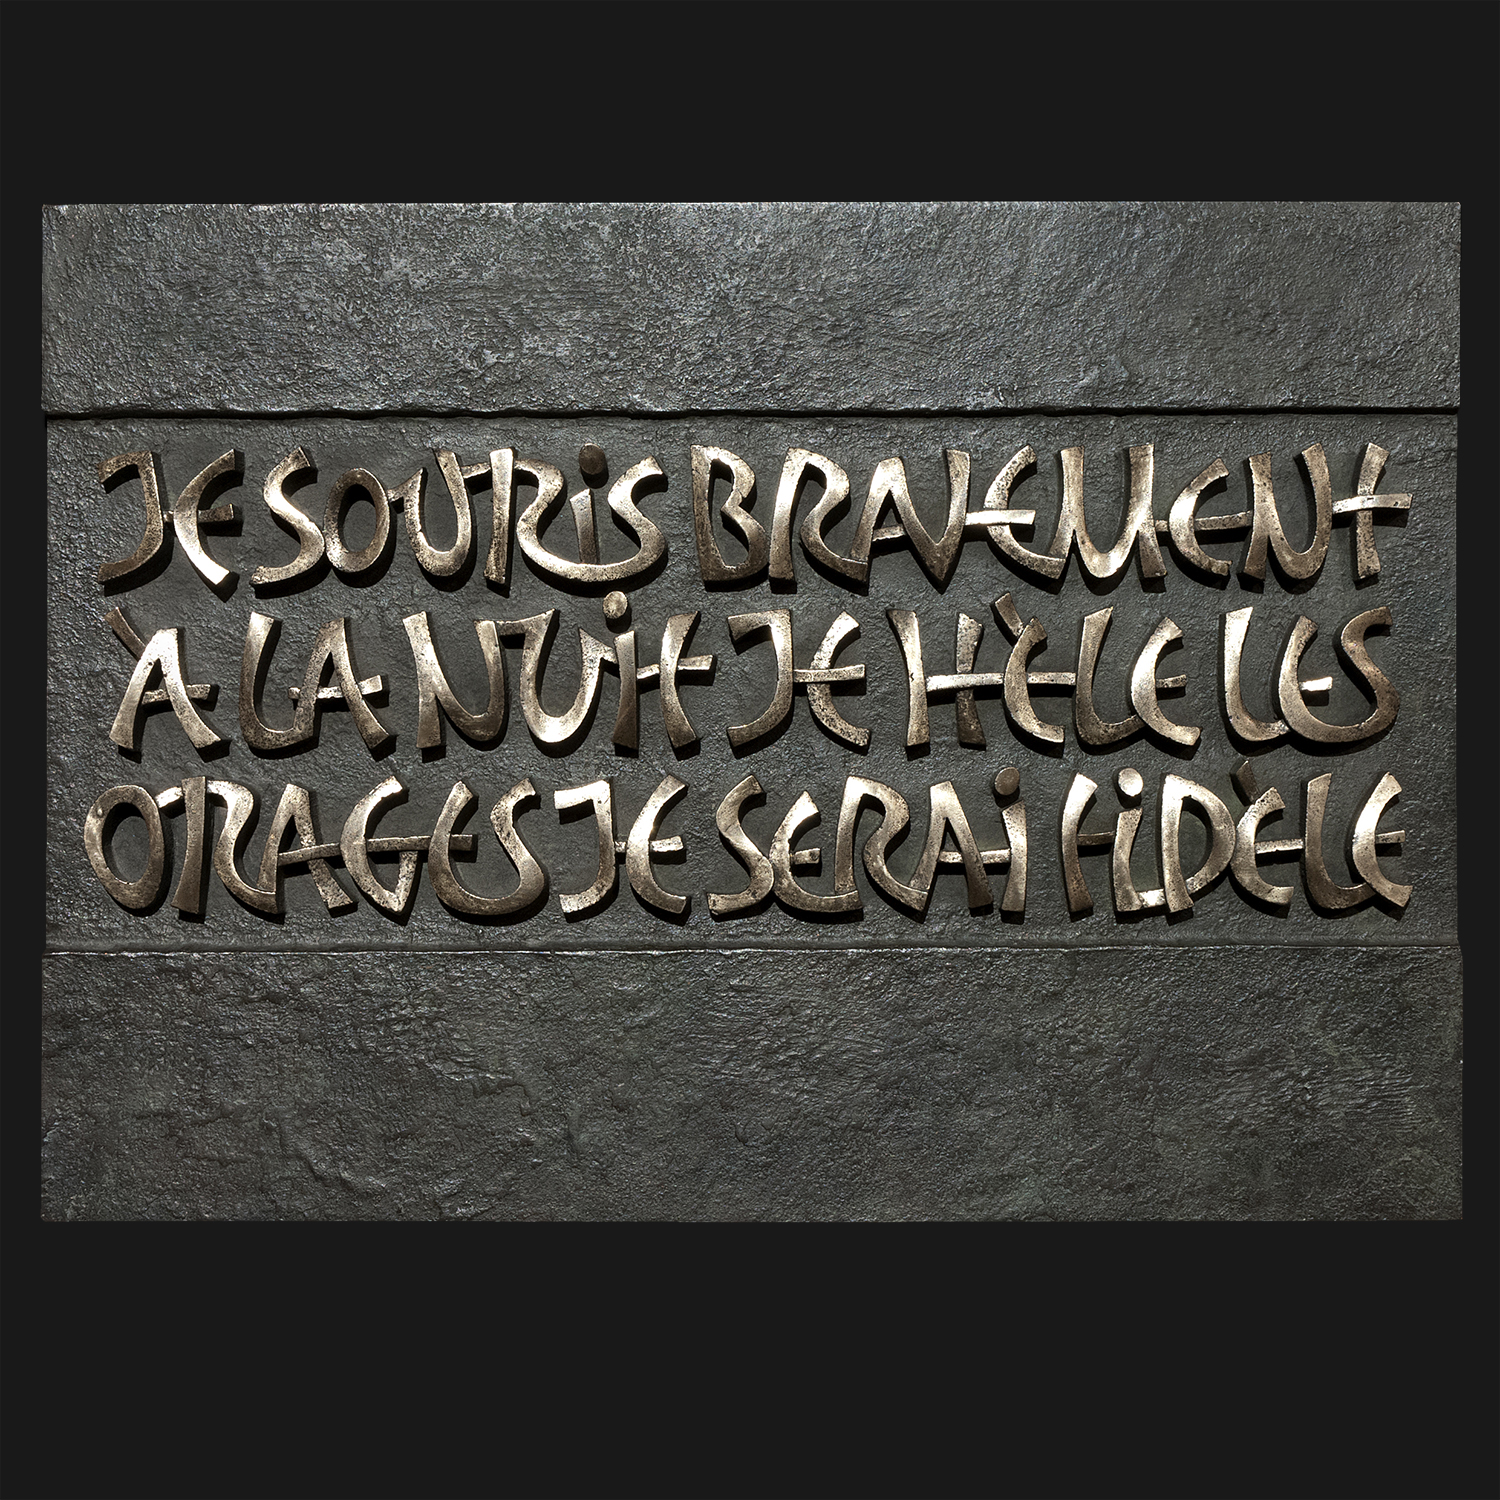 Robbie Schneider - sculpted letters in bronze - Lettering Sculptor